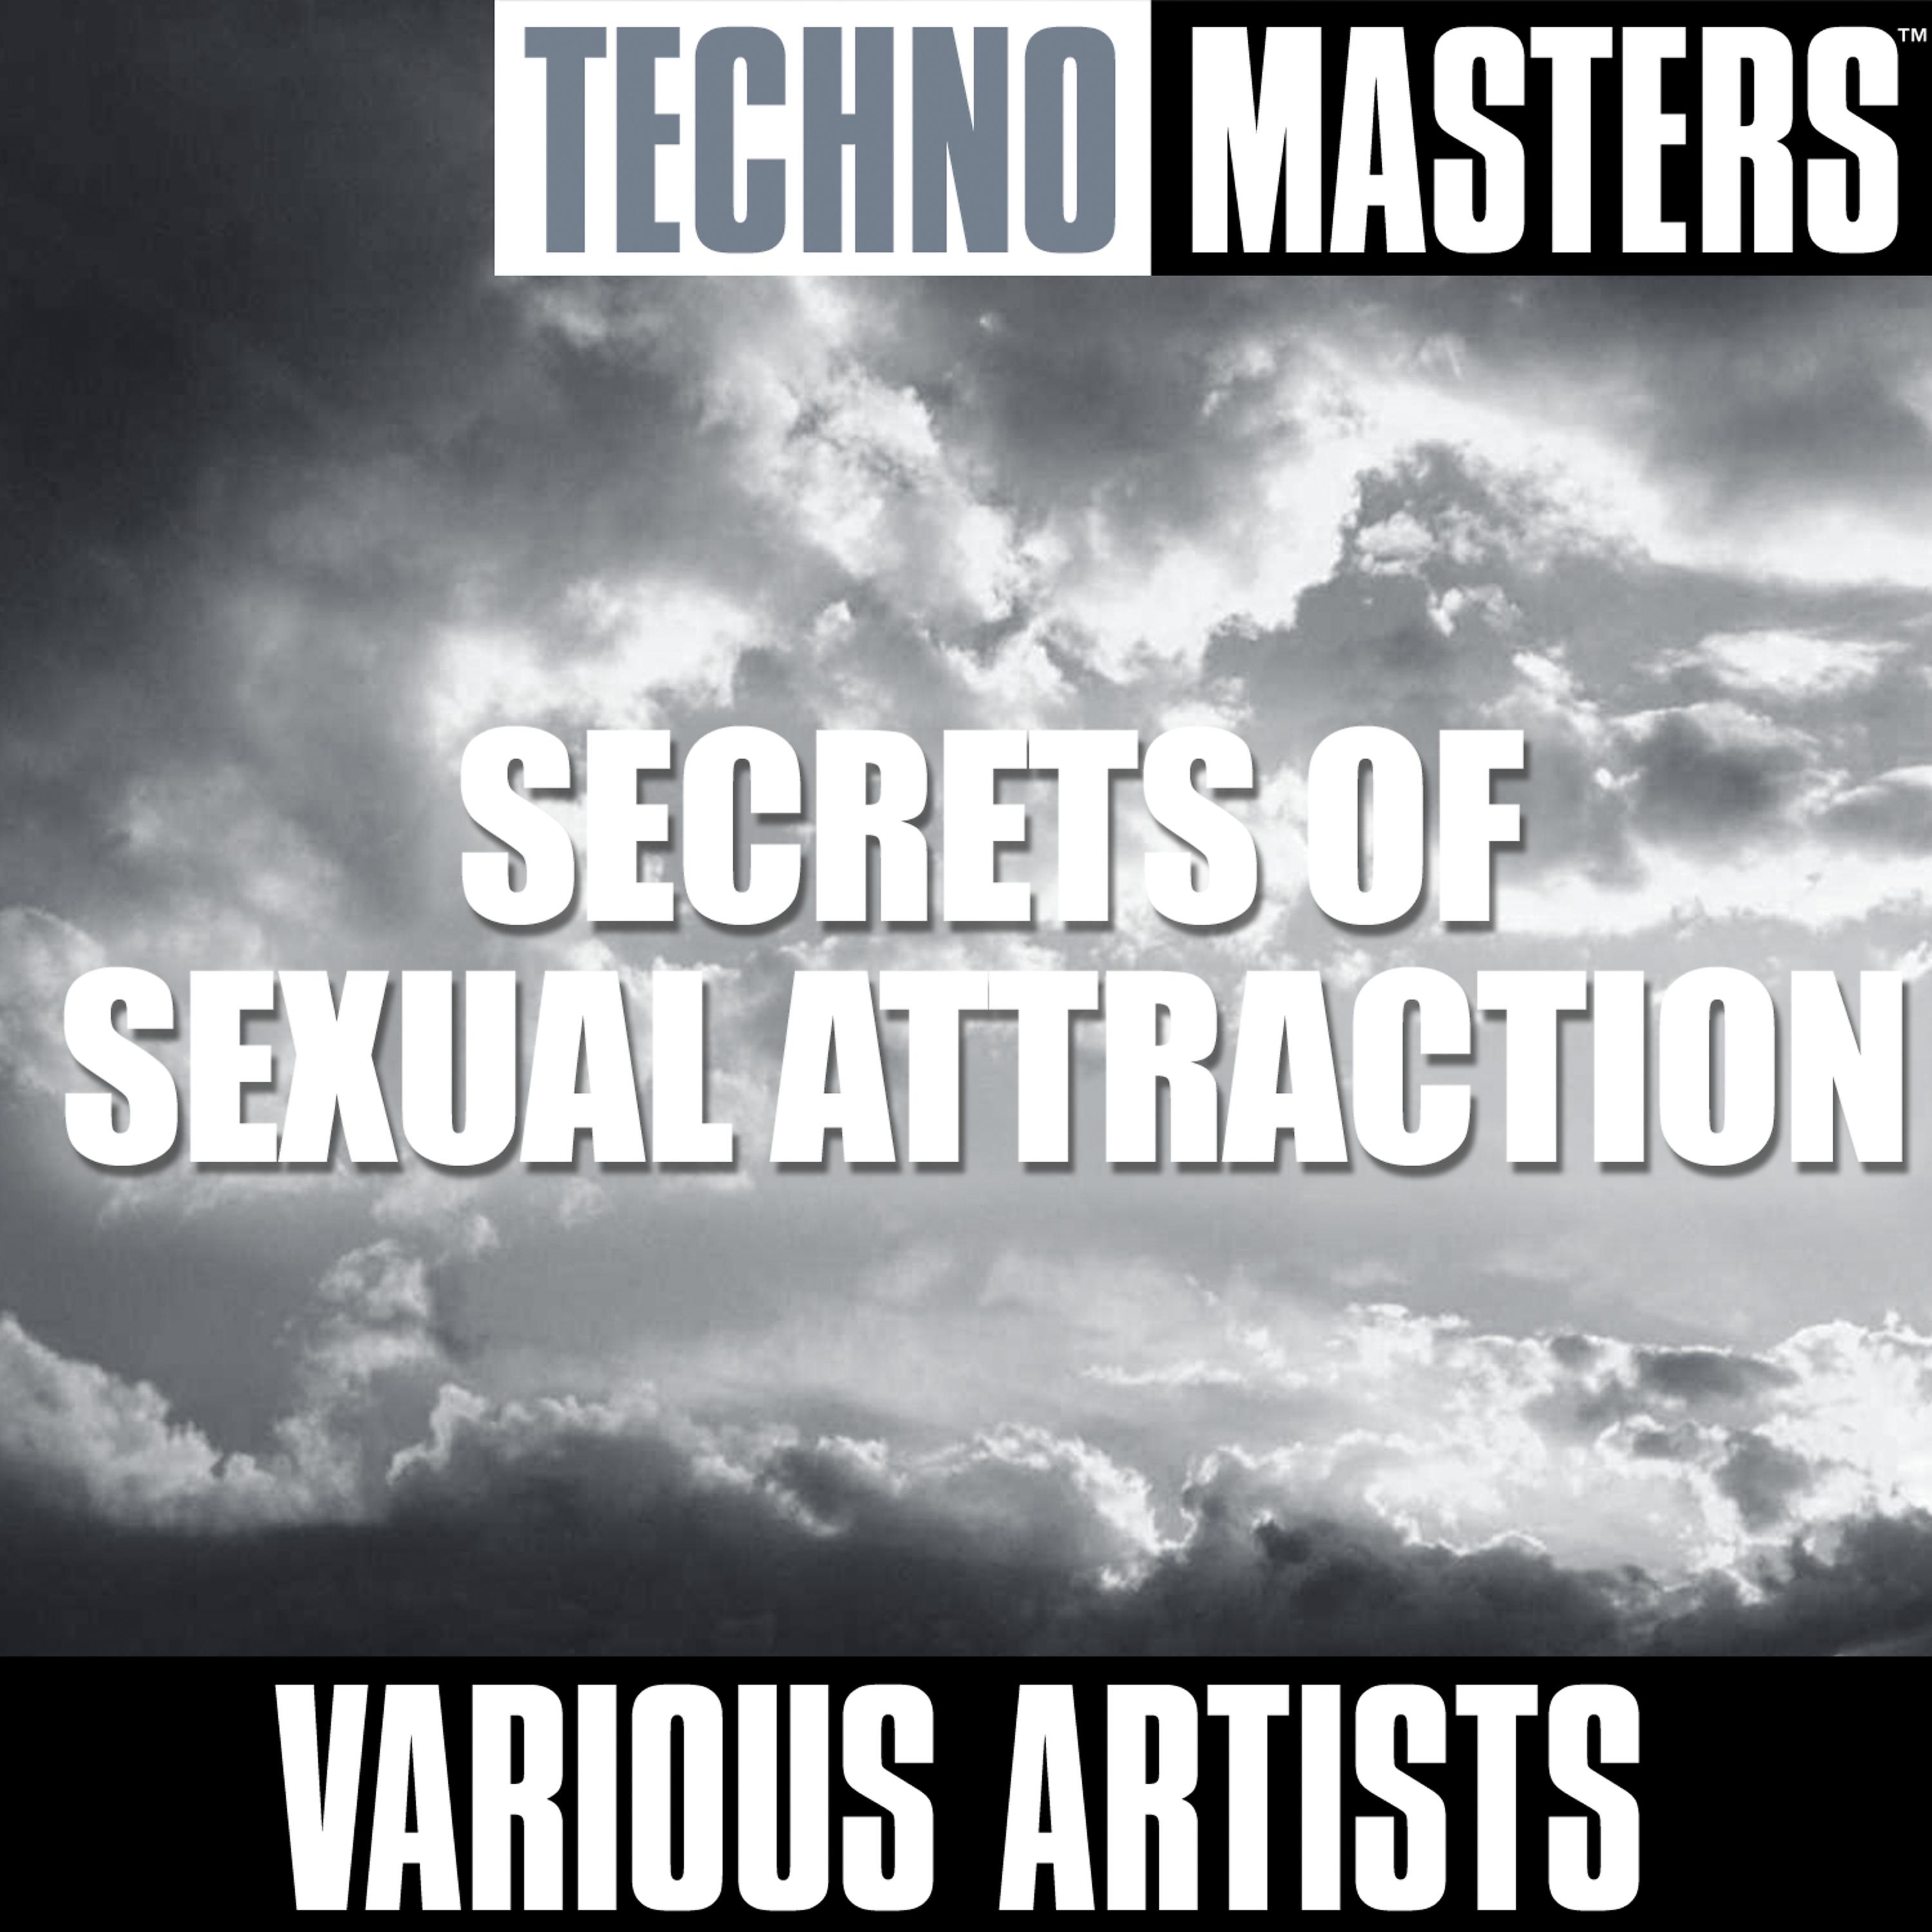 Master secrets